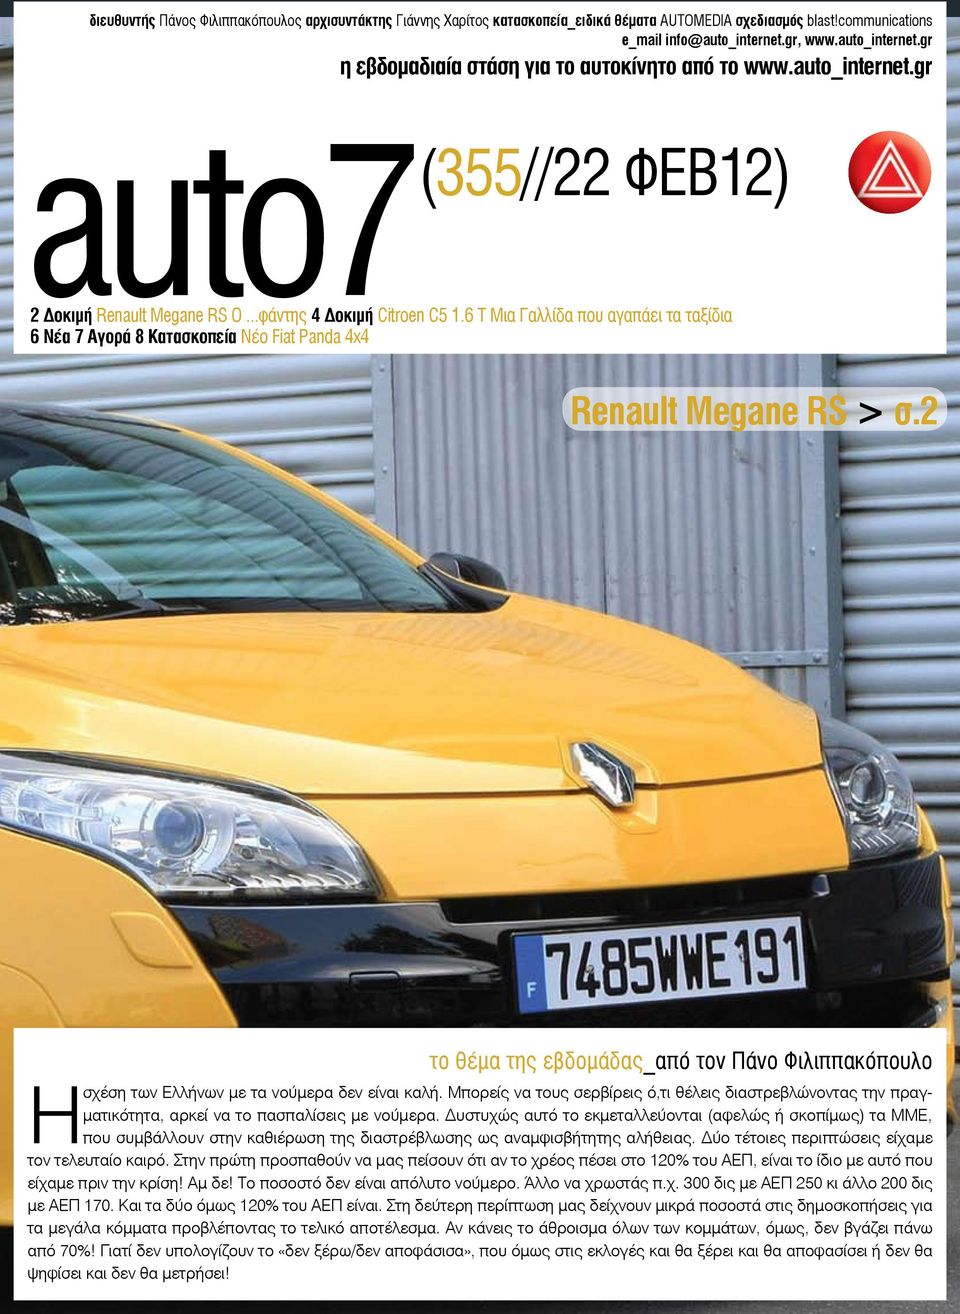 6 T Μια Γαλλίδα που αγαπάει τα ταξίδια 6 Νέα 7 Αγορά 8 Κατασκοπεία Νέο Fiat Panda 4x4 (355//22 ΦΕΒ12) Renault Megane RS > σ.